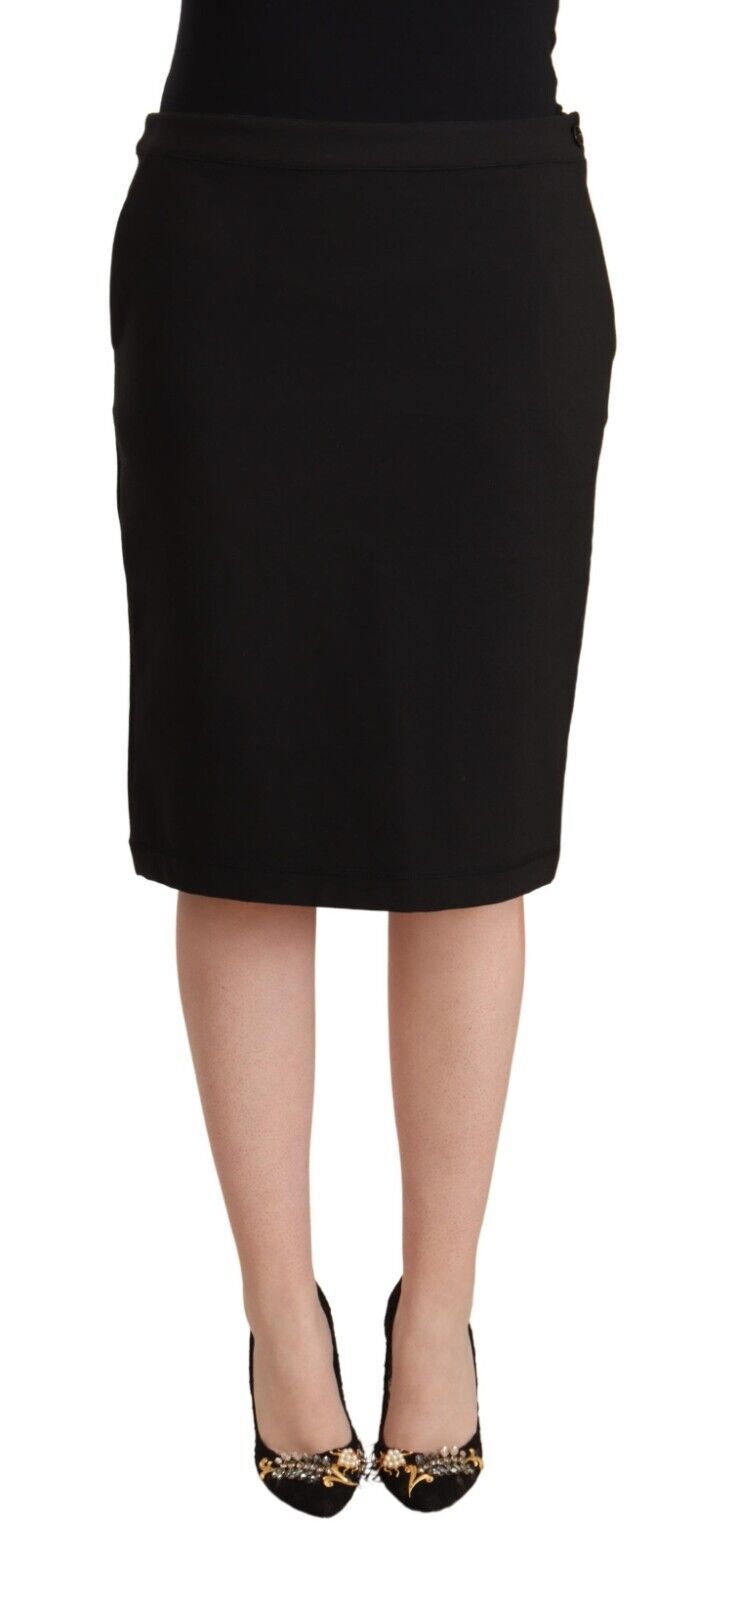 GF Ferre Chic Black Pencil Skirt Knee Length